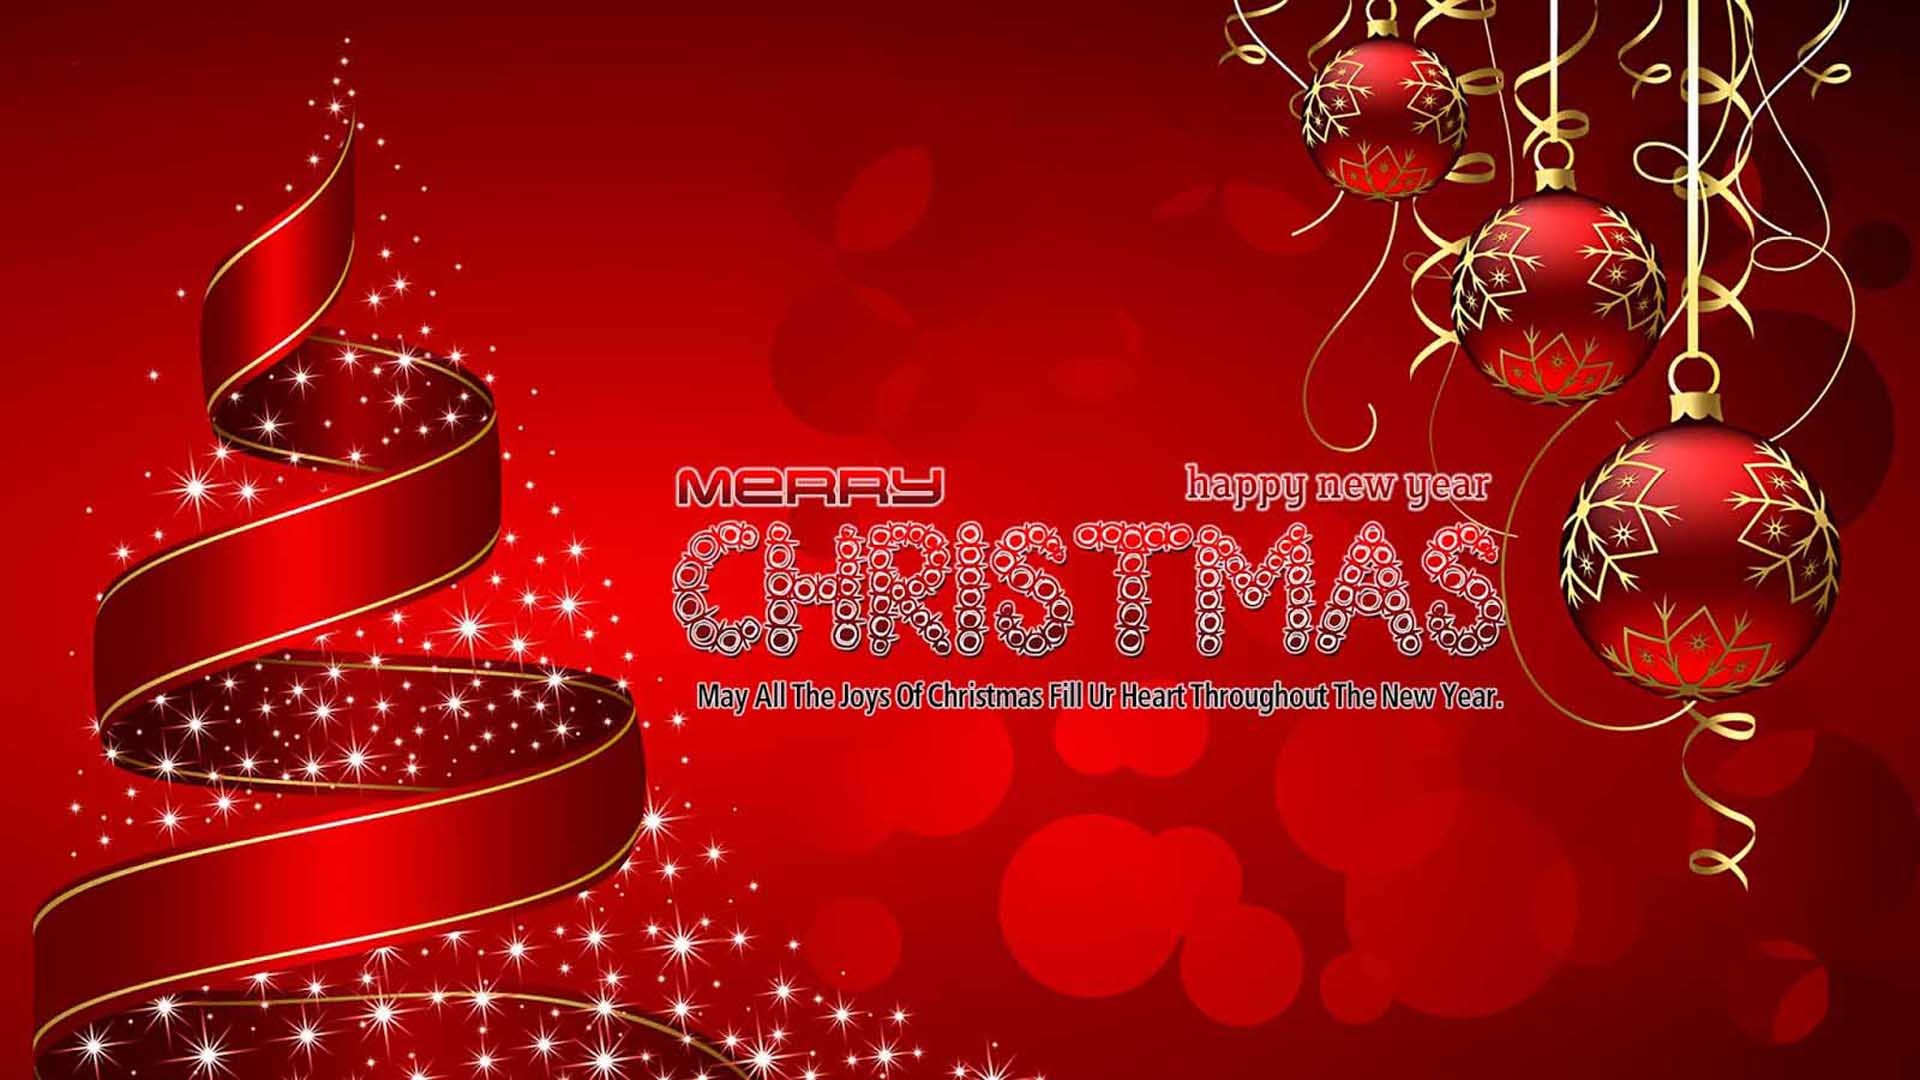 Merry Christmas Happy New Year 2022 Christmas Greetings Desktop HD Wallpaper 1920x1080, Wallpaper13.com